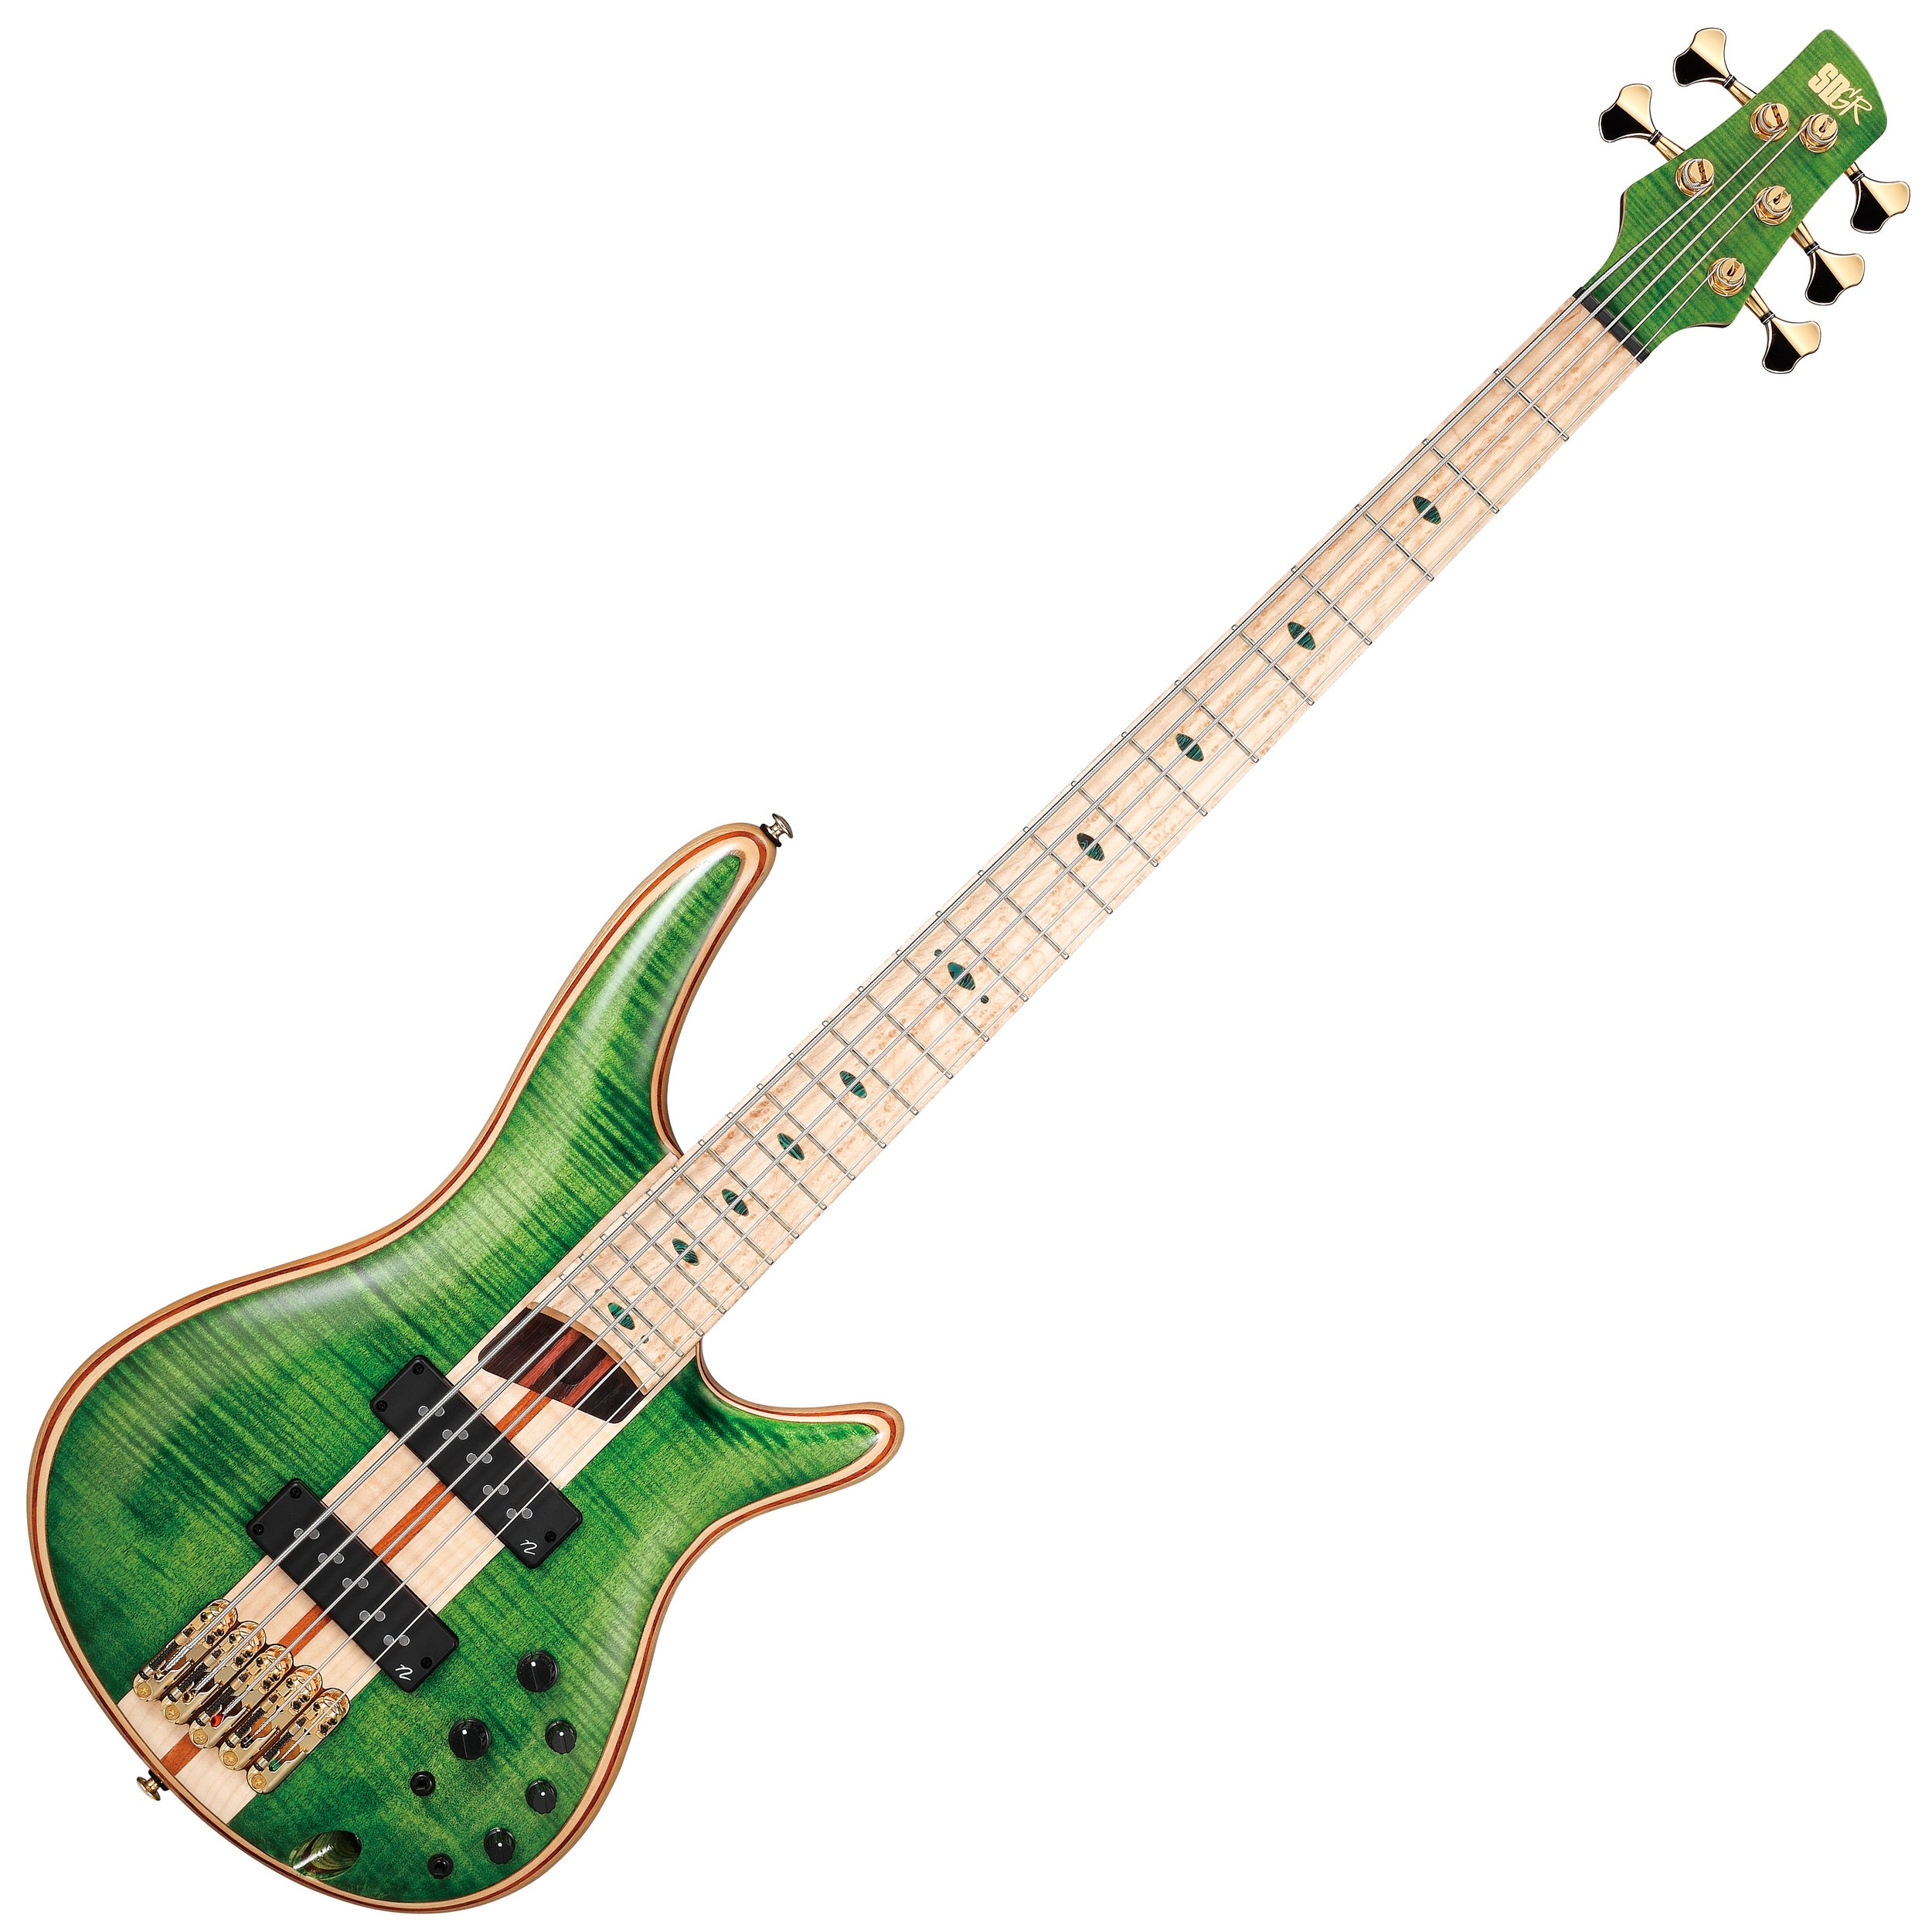 Ibanez Sr5fmdx Premium 5 String Bass Guitar - Emerald Green Low Gloss